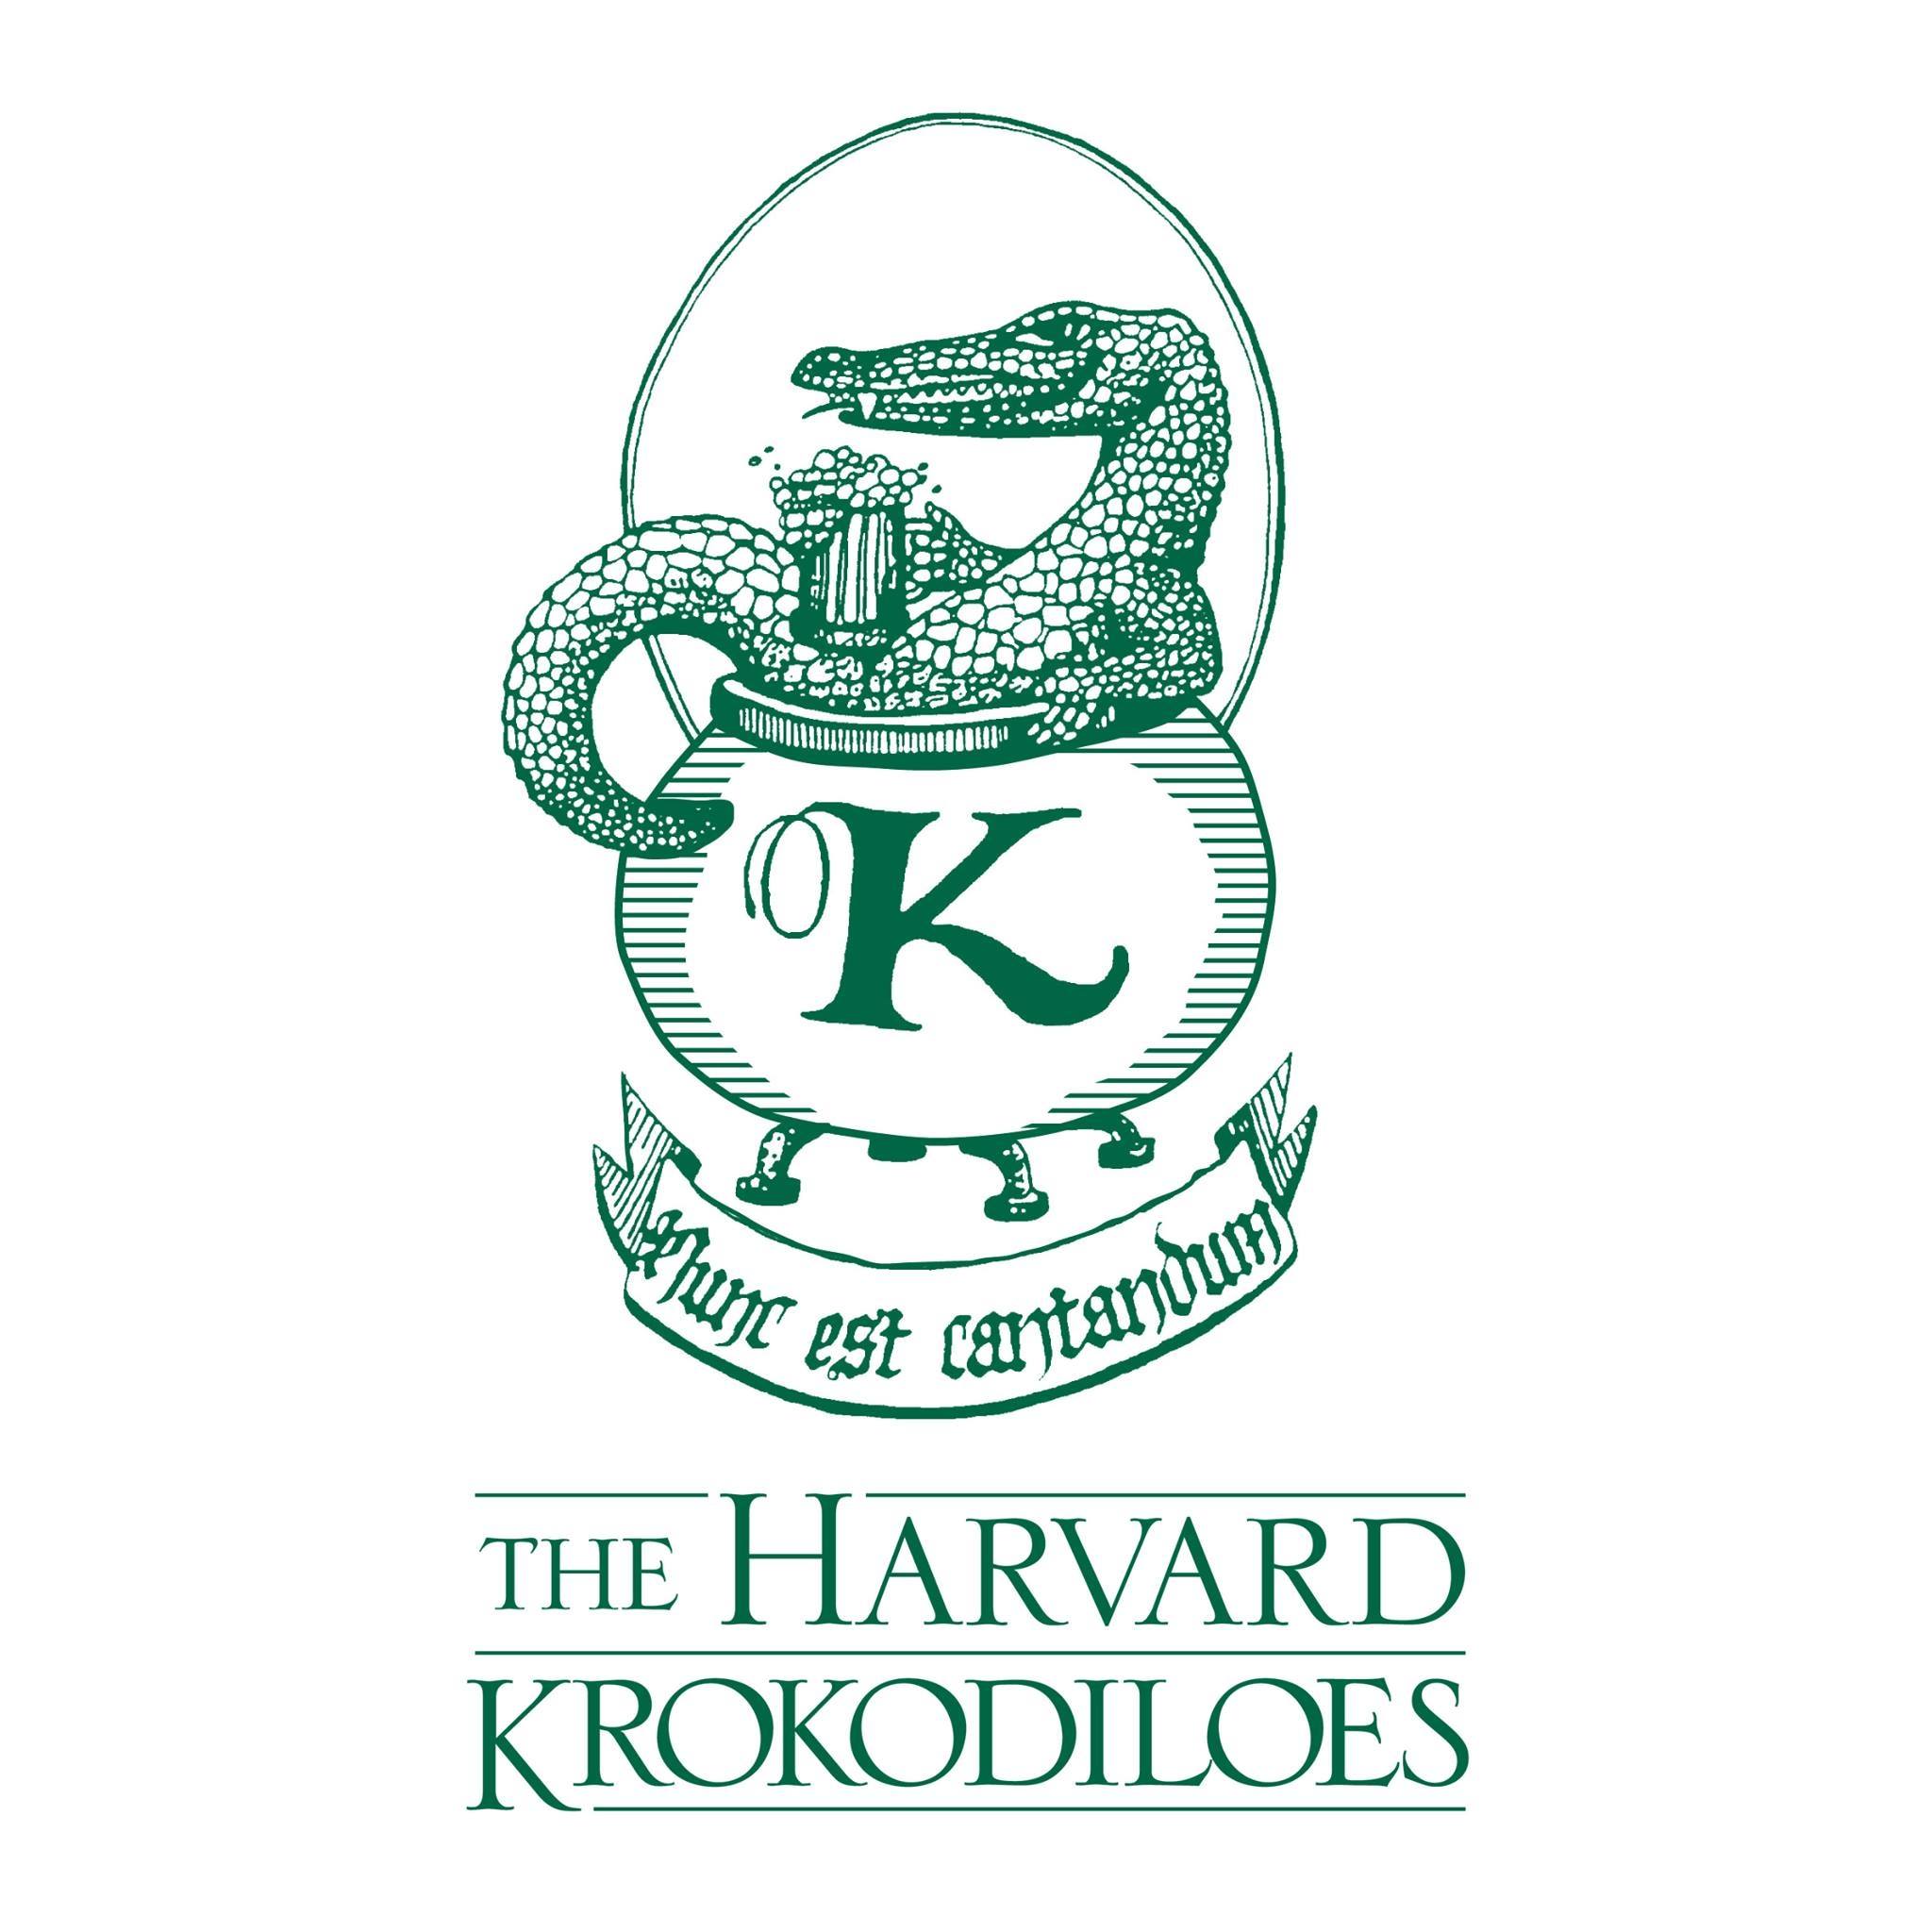 The Harvard Krokodiloes logo